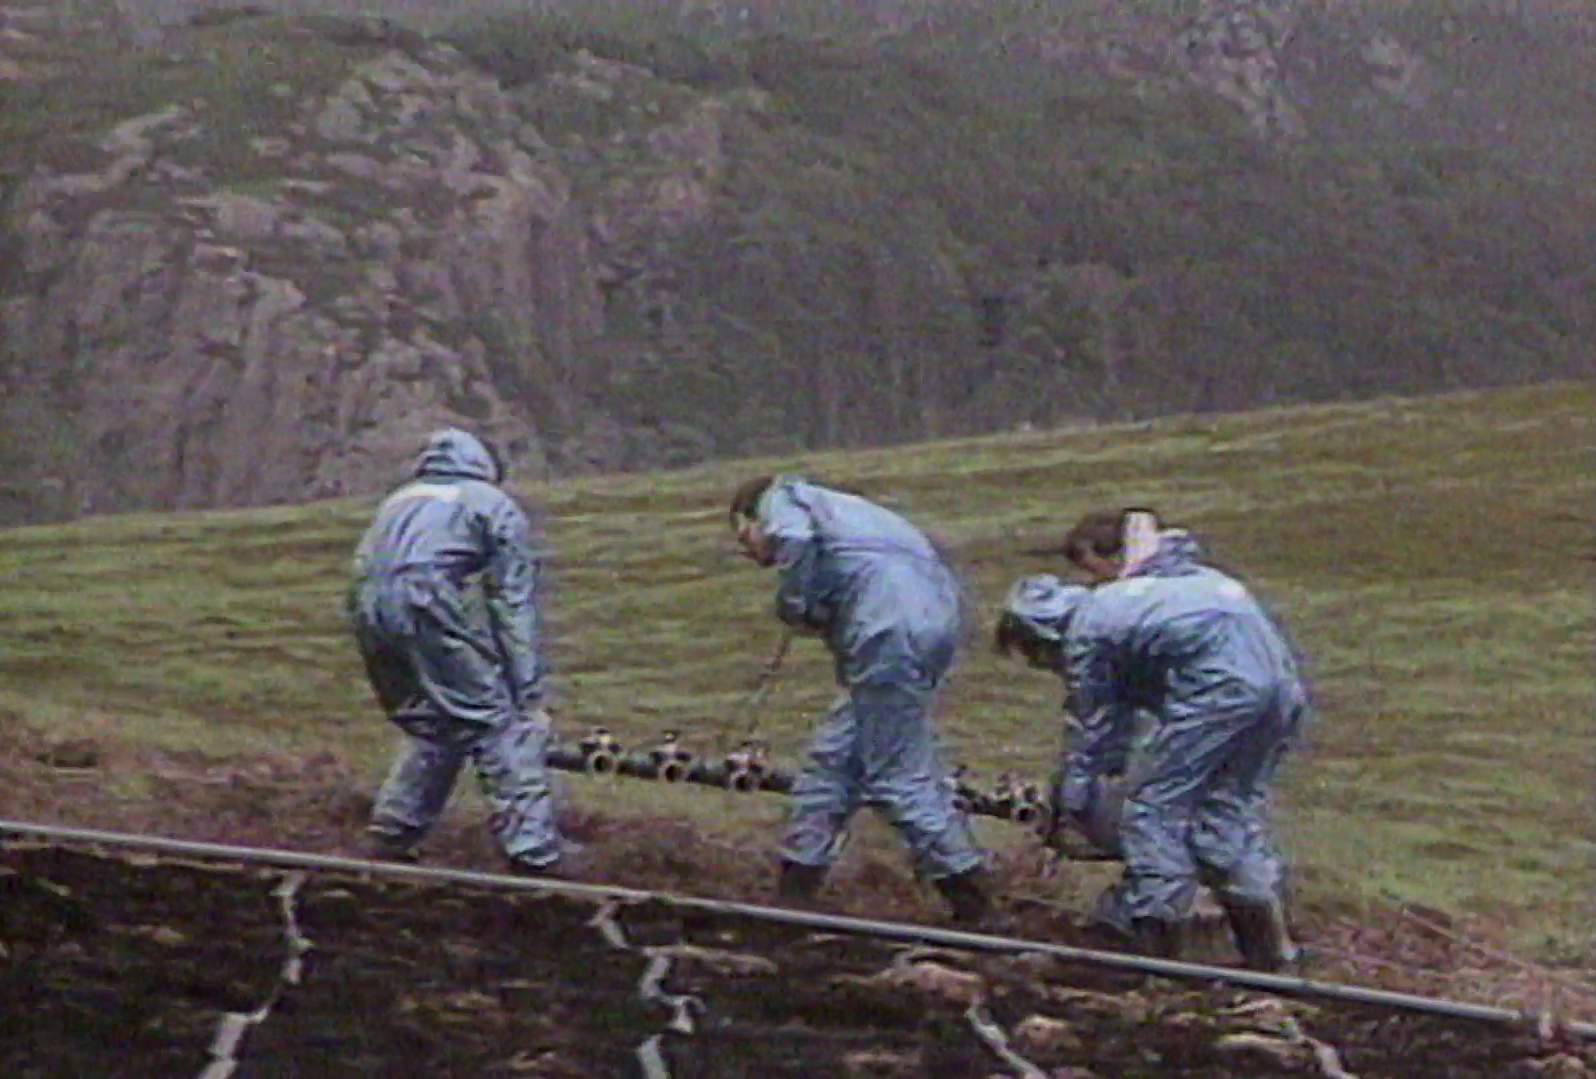 In the 1980s the island underwent extensive decontamination works.